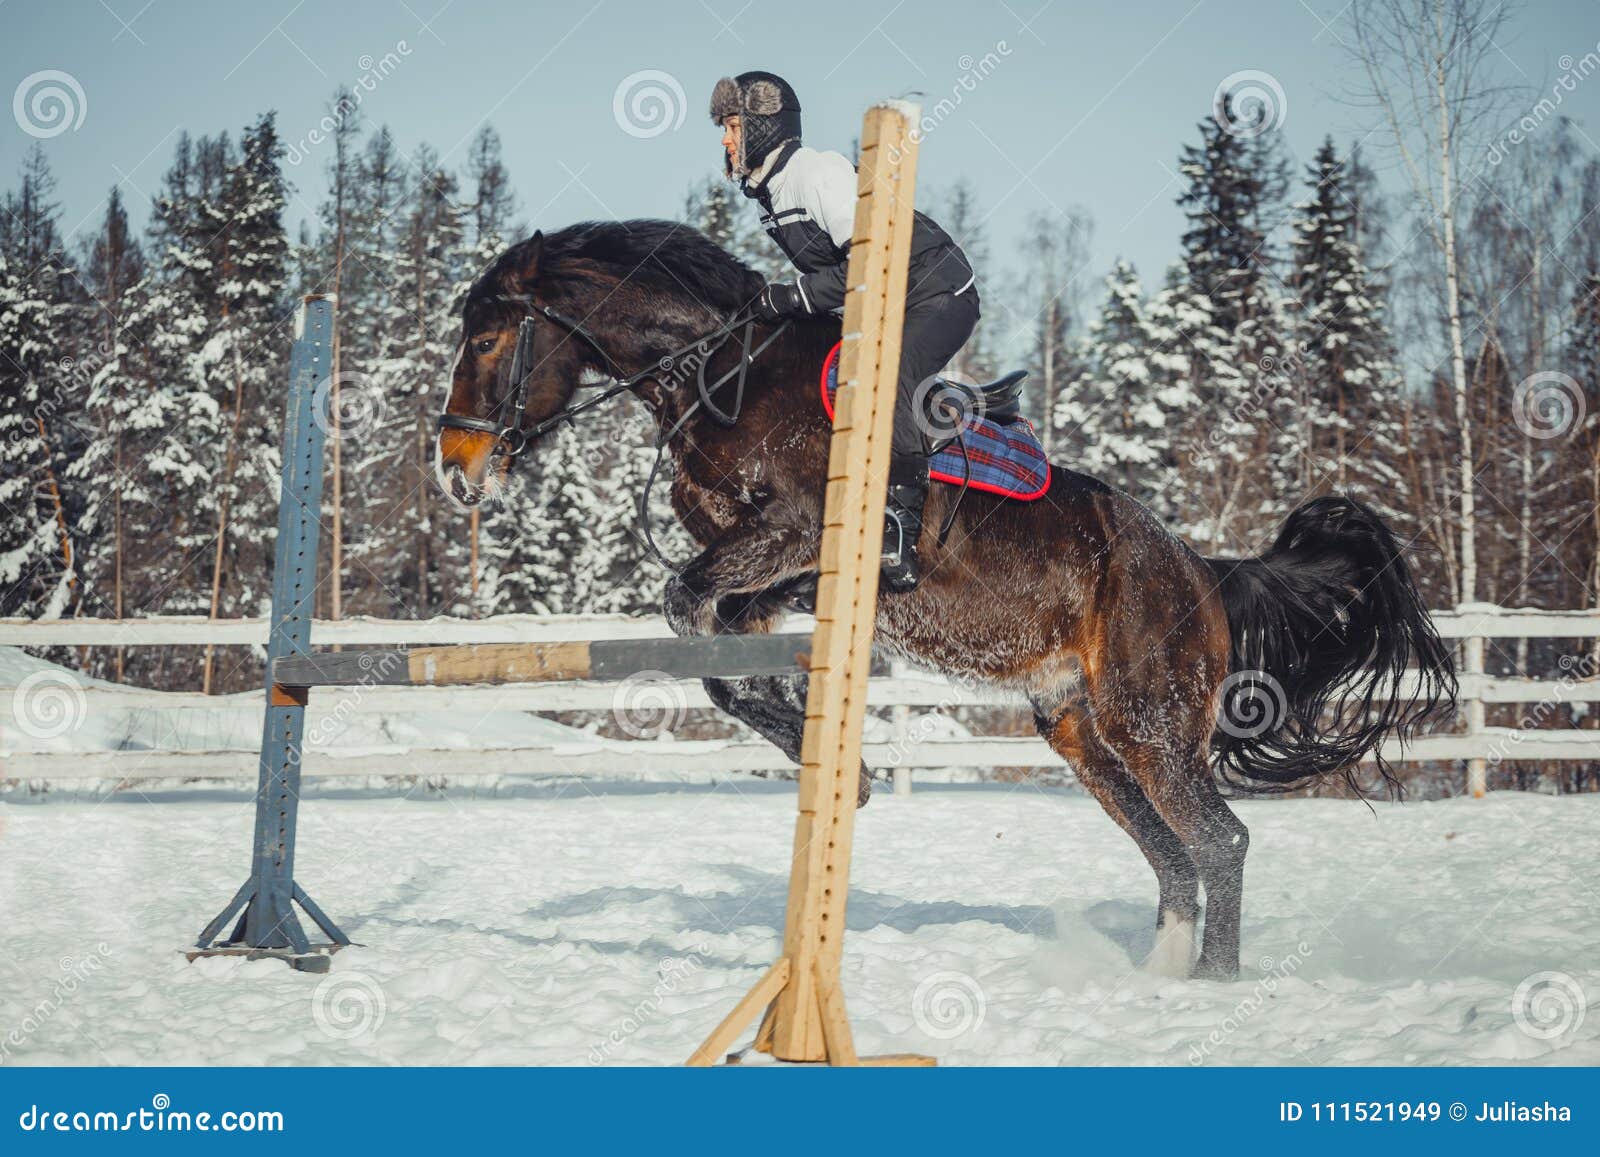 winter jump horse ride jumping